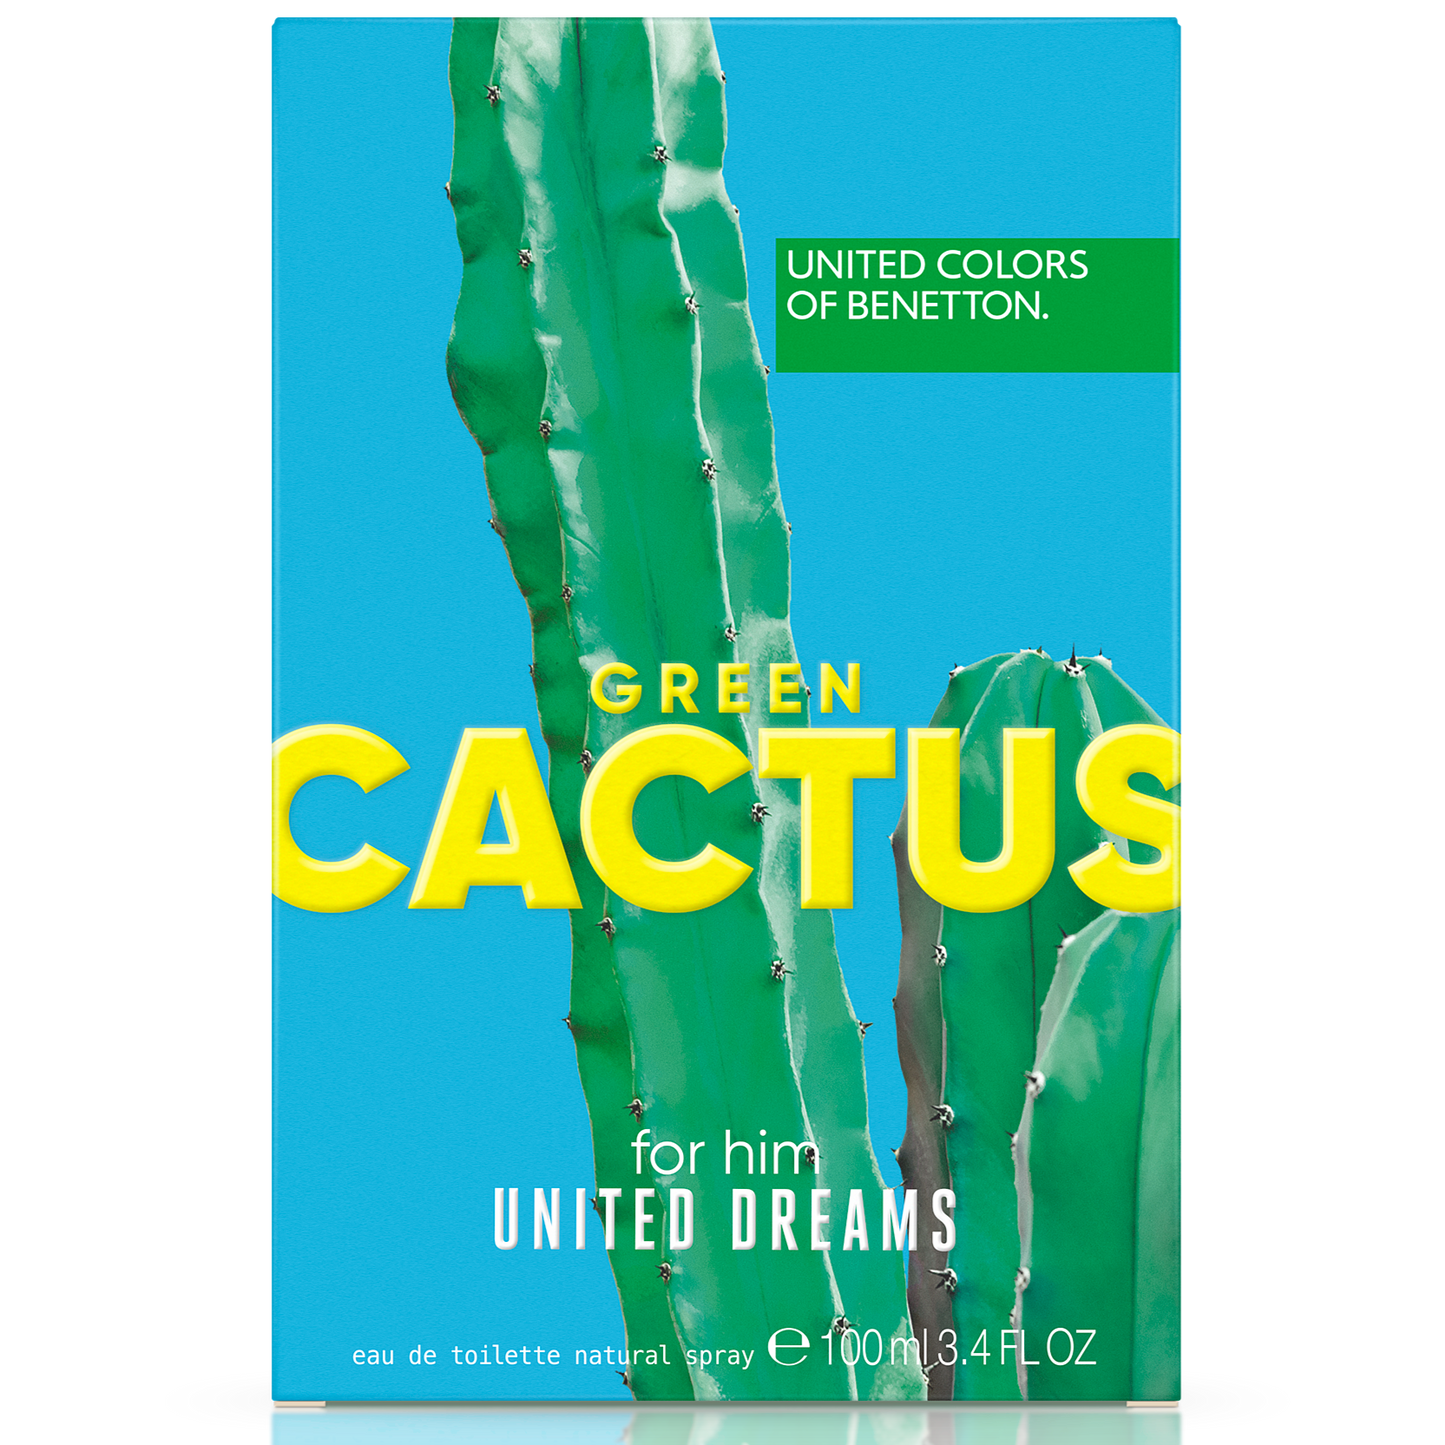 United Dreams Cactus For Him